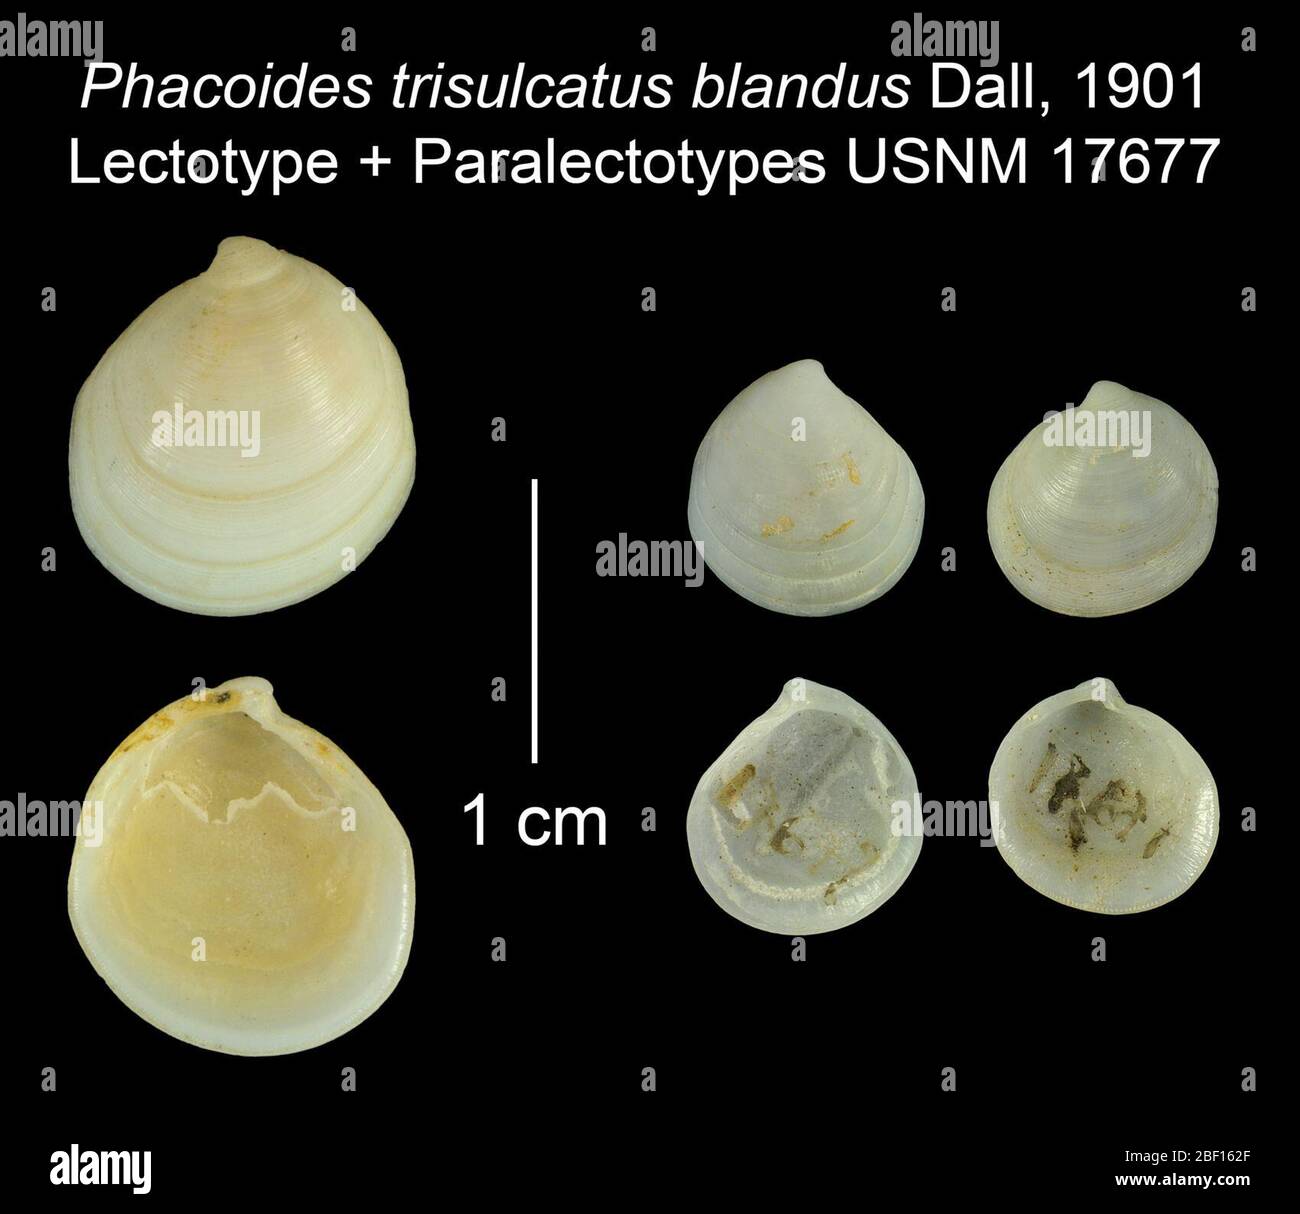 Phacoides trisulcatus blandus. 20 Jan 20163 Stock Photo